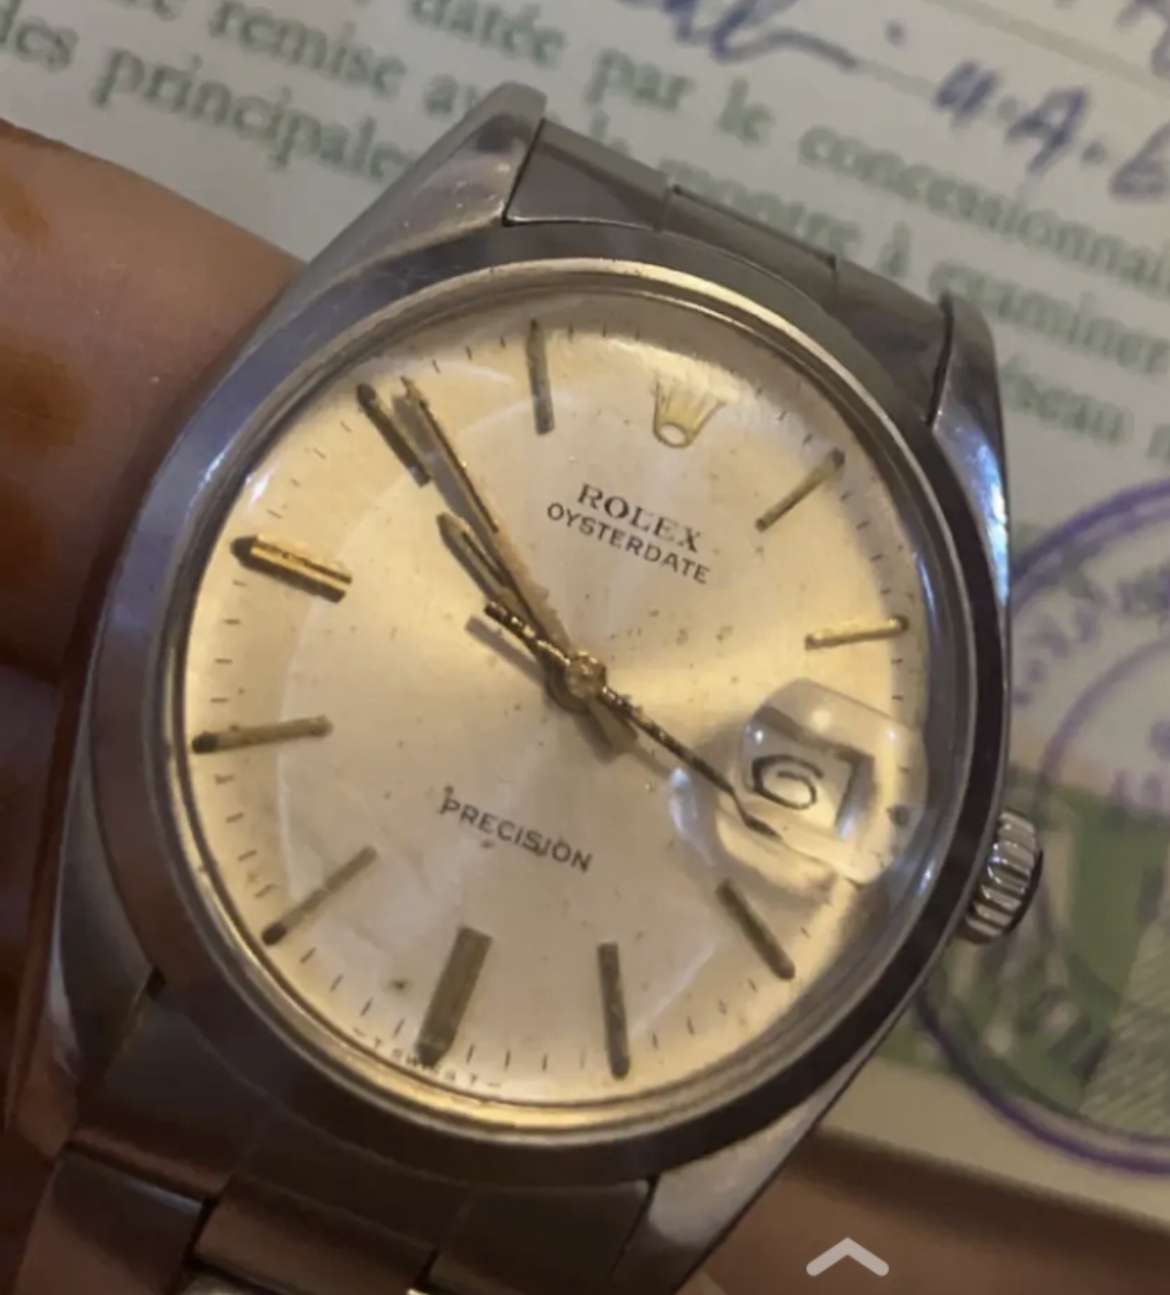 Antique Rolex watch for sale